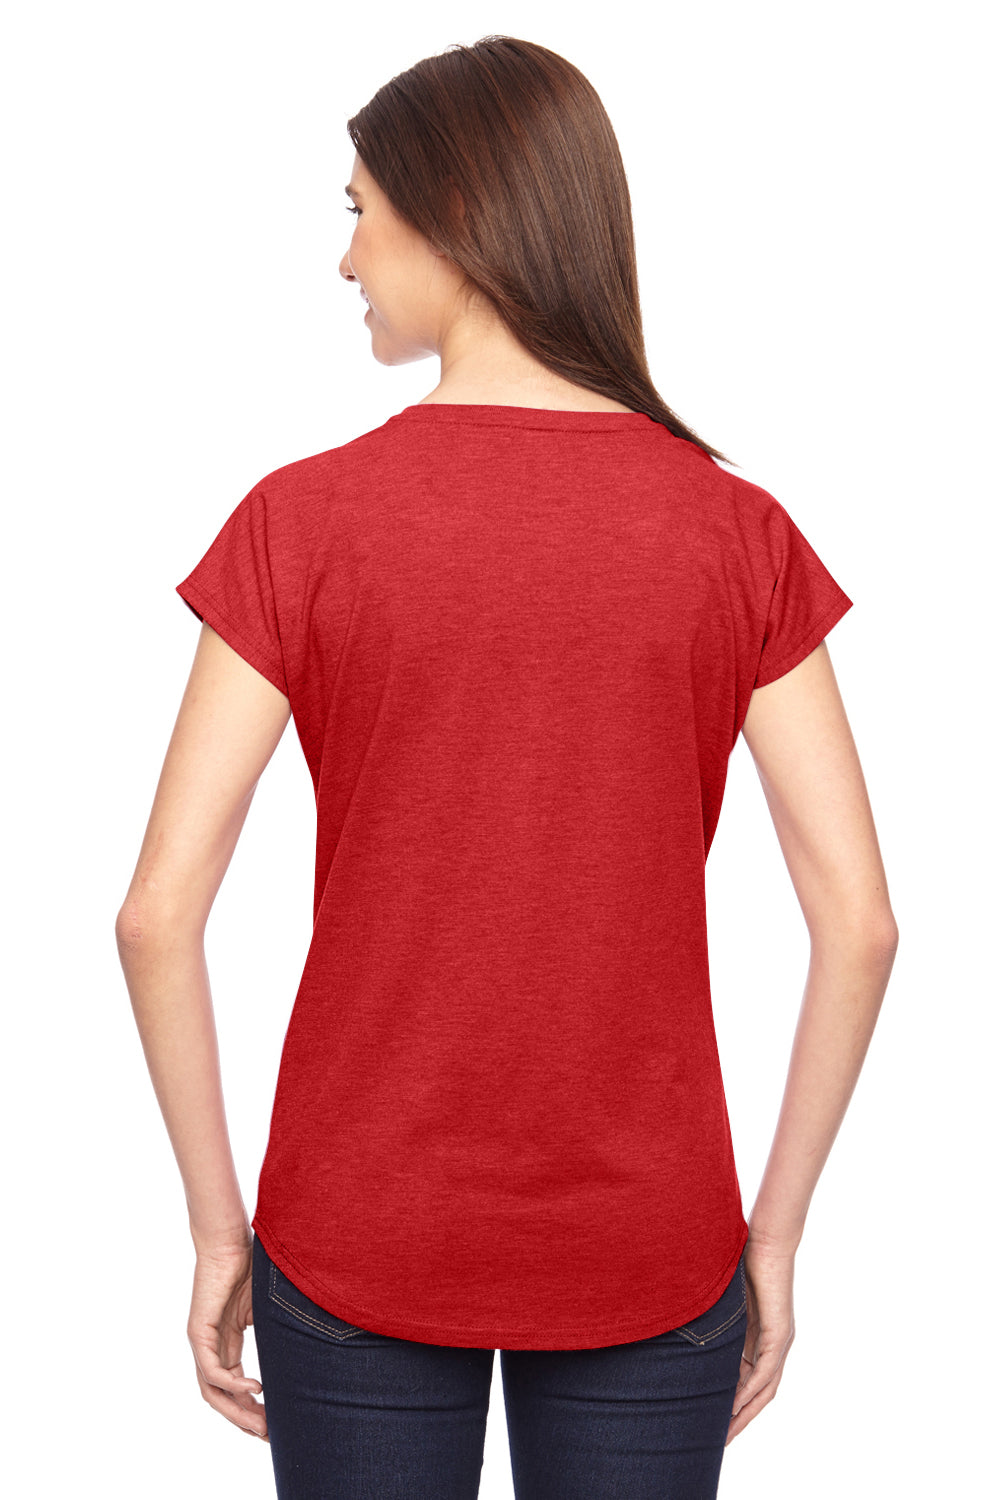 Anvil 6750VL Womens Short Sleeve V-Neck T-Shirt Heather Red Back